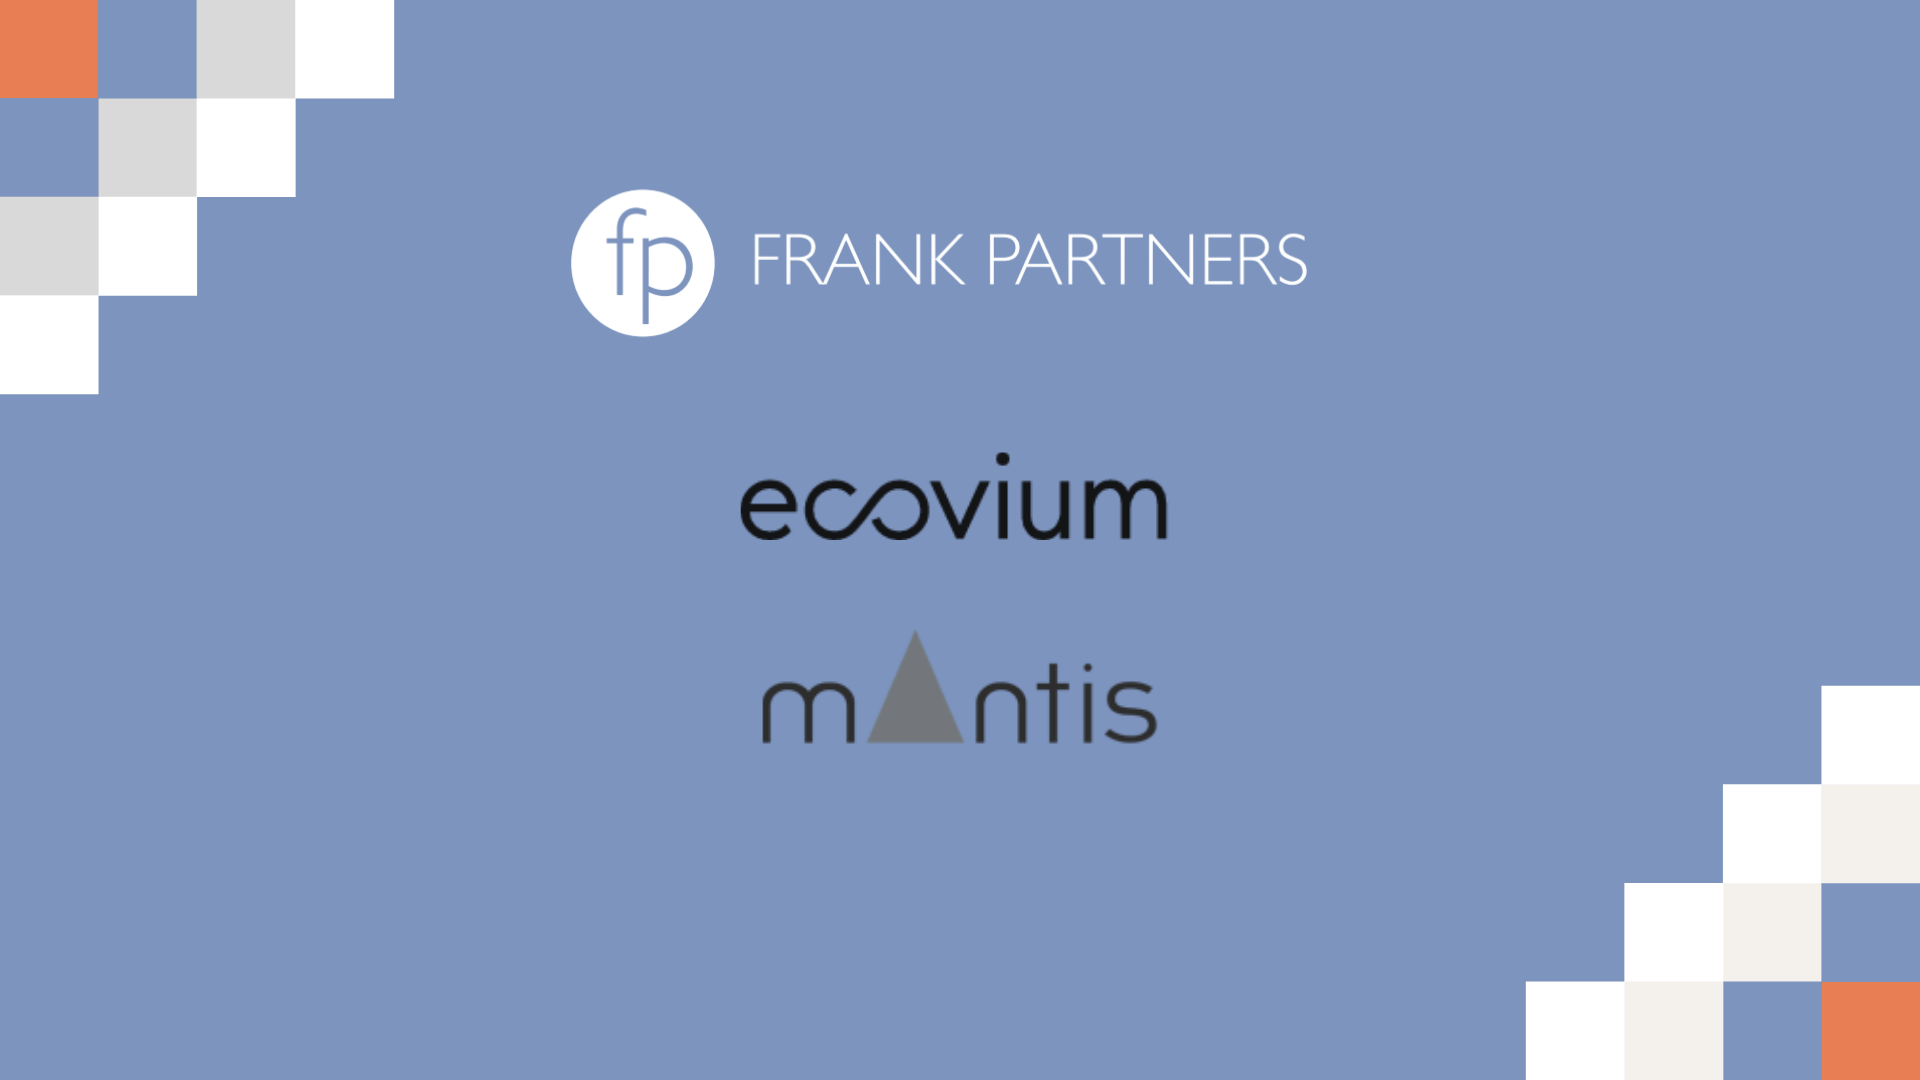 FP advised FSN Capital Partners’ portfolio company ecovium on ESG for its acquisition of mantis.group